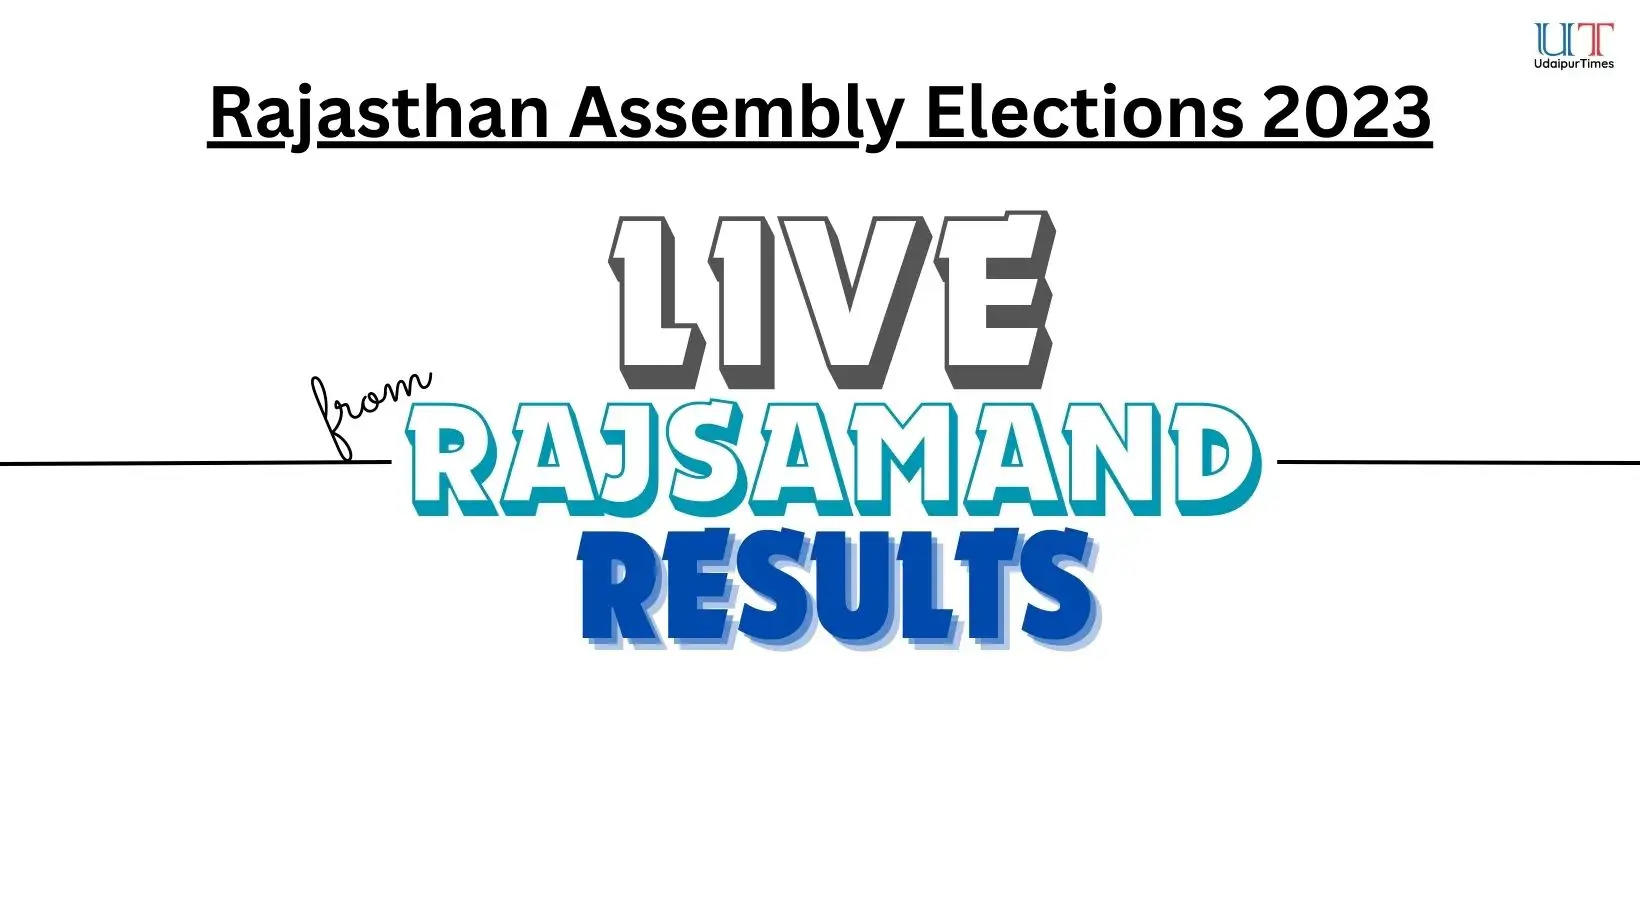 LIVE ELECTION RESULTS - RAJSAMAND